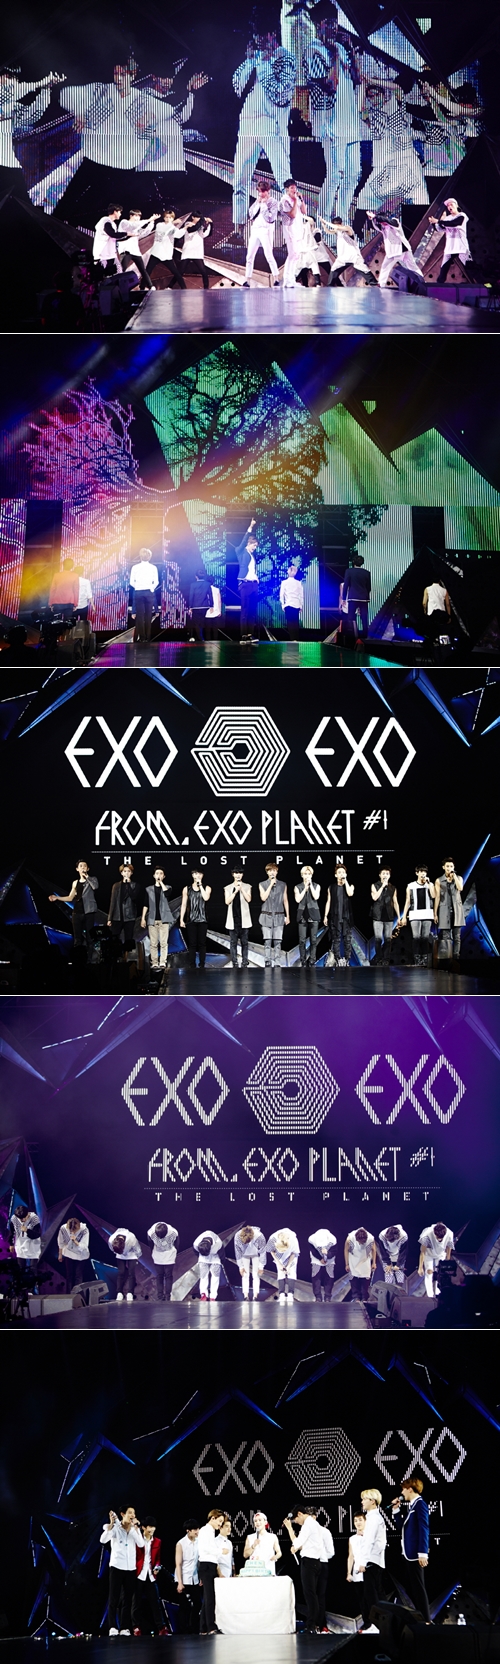 EXO北京演唱會盛況空前 2萬多張票飛速售罄